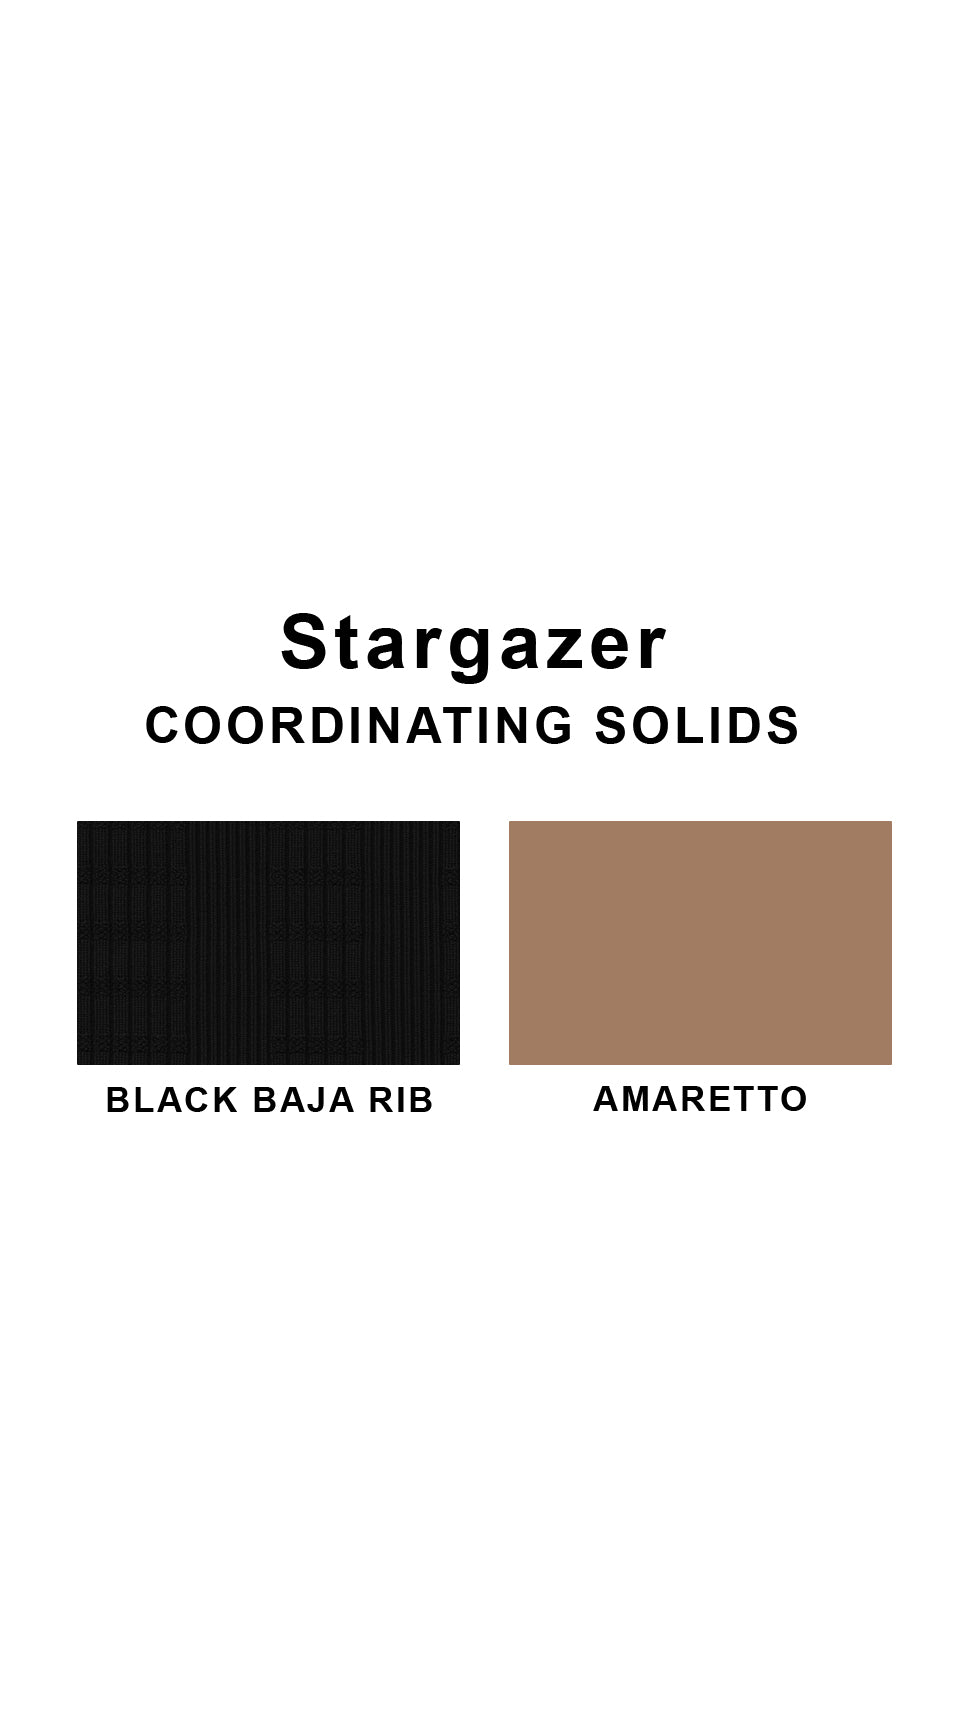 Coordinating solids chart for Stargazer swimsuit print: Black Baja Rib and Amaretto